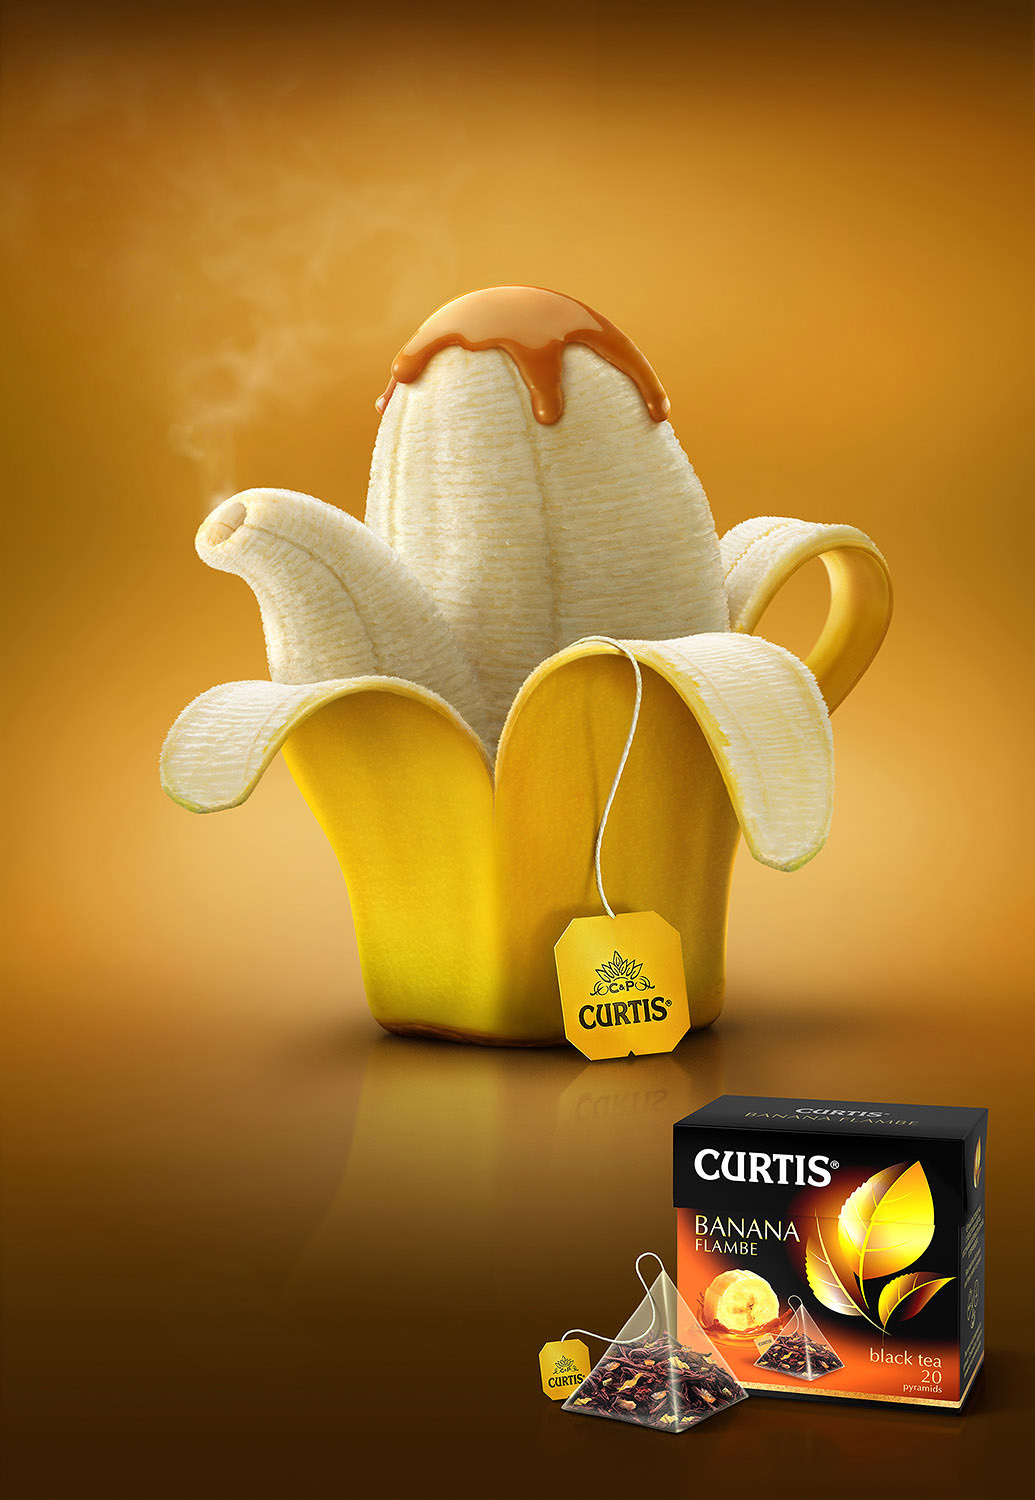 Curtis2 чай банан реклама